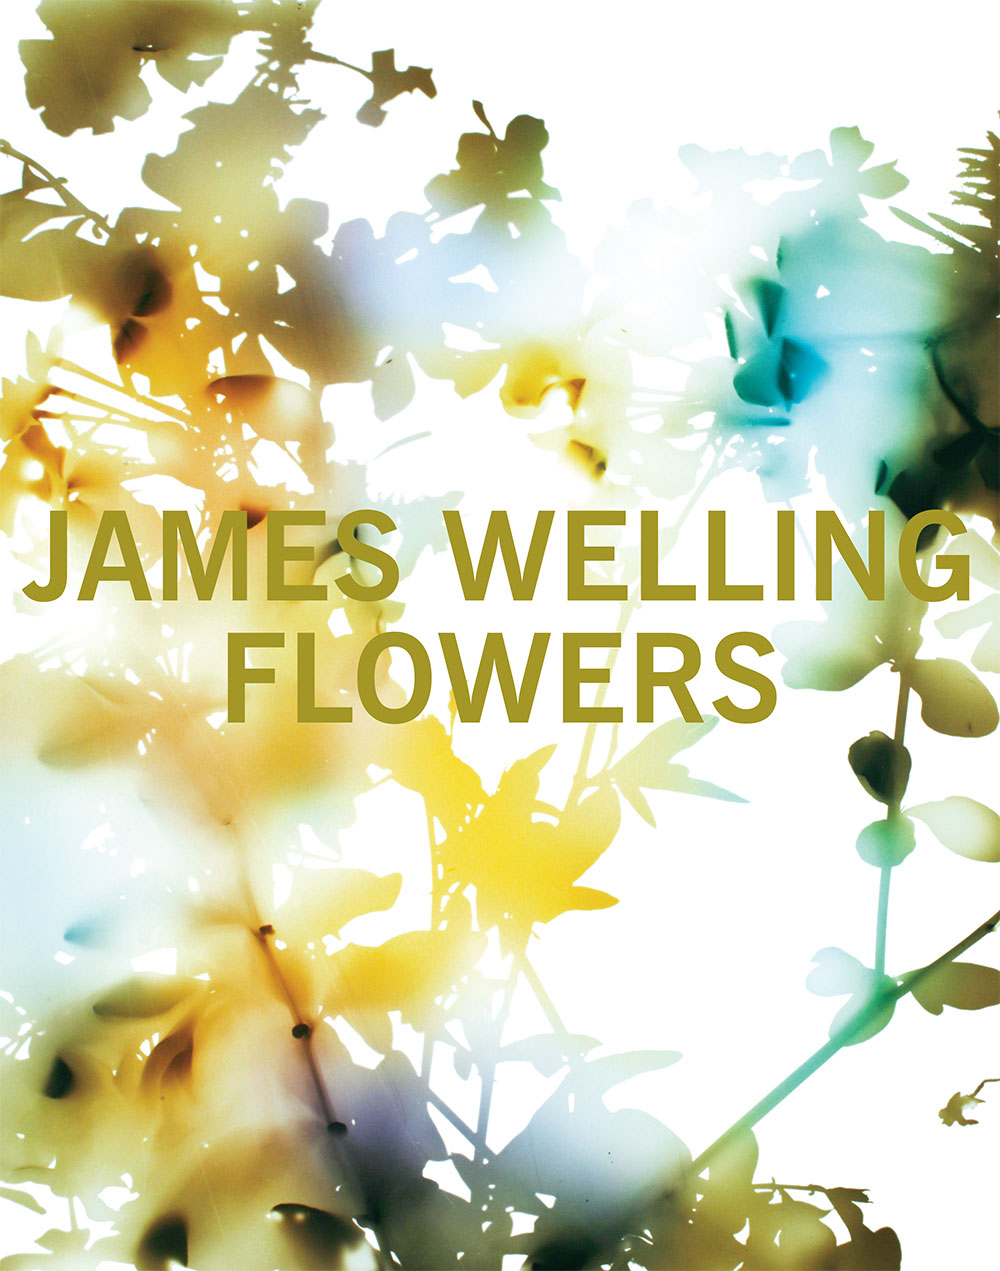 James Welling: Flowers